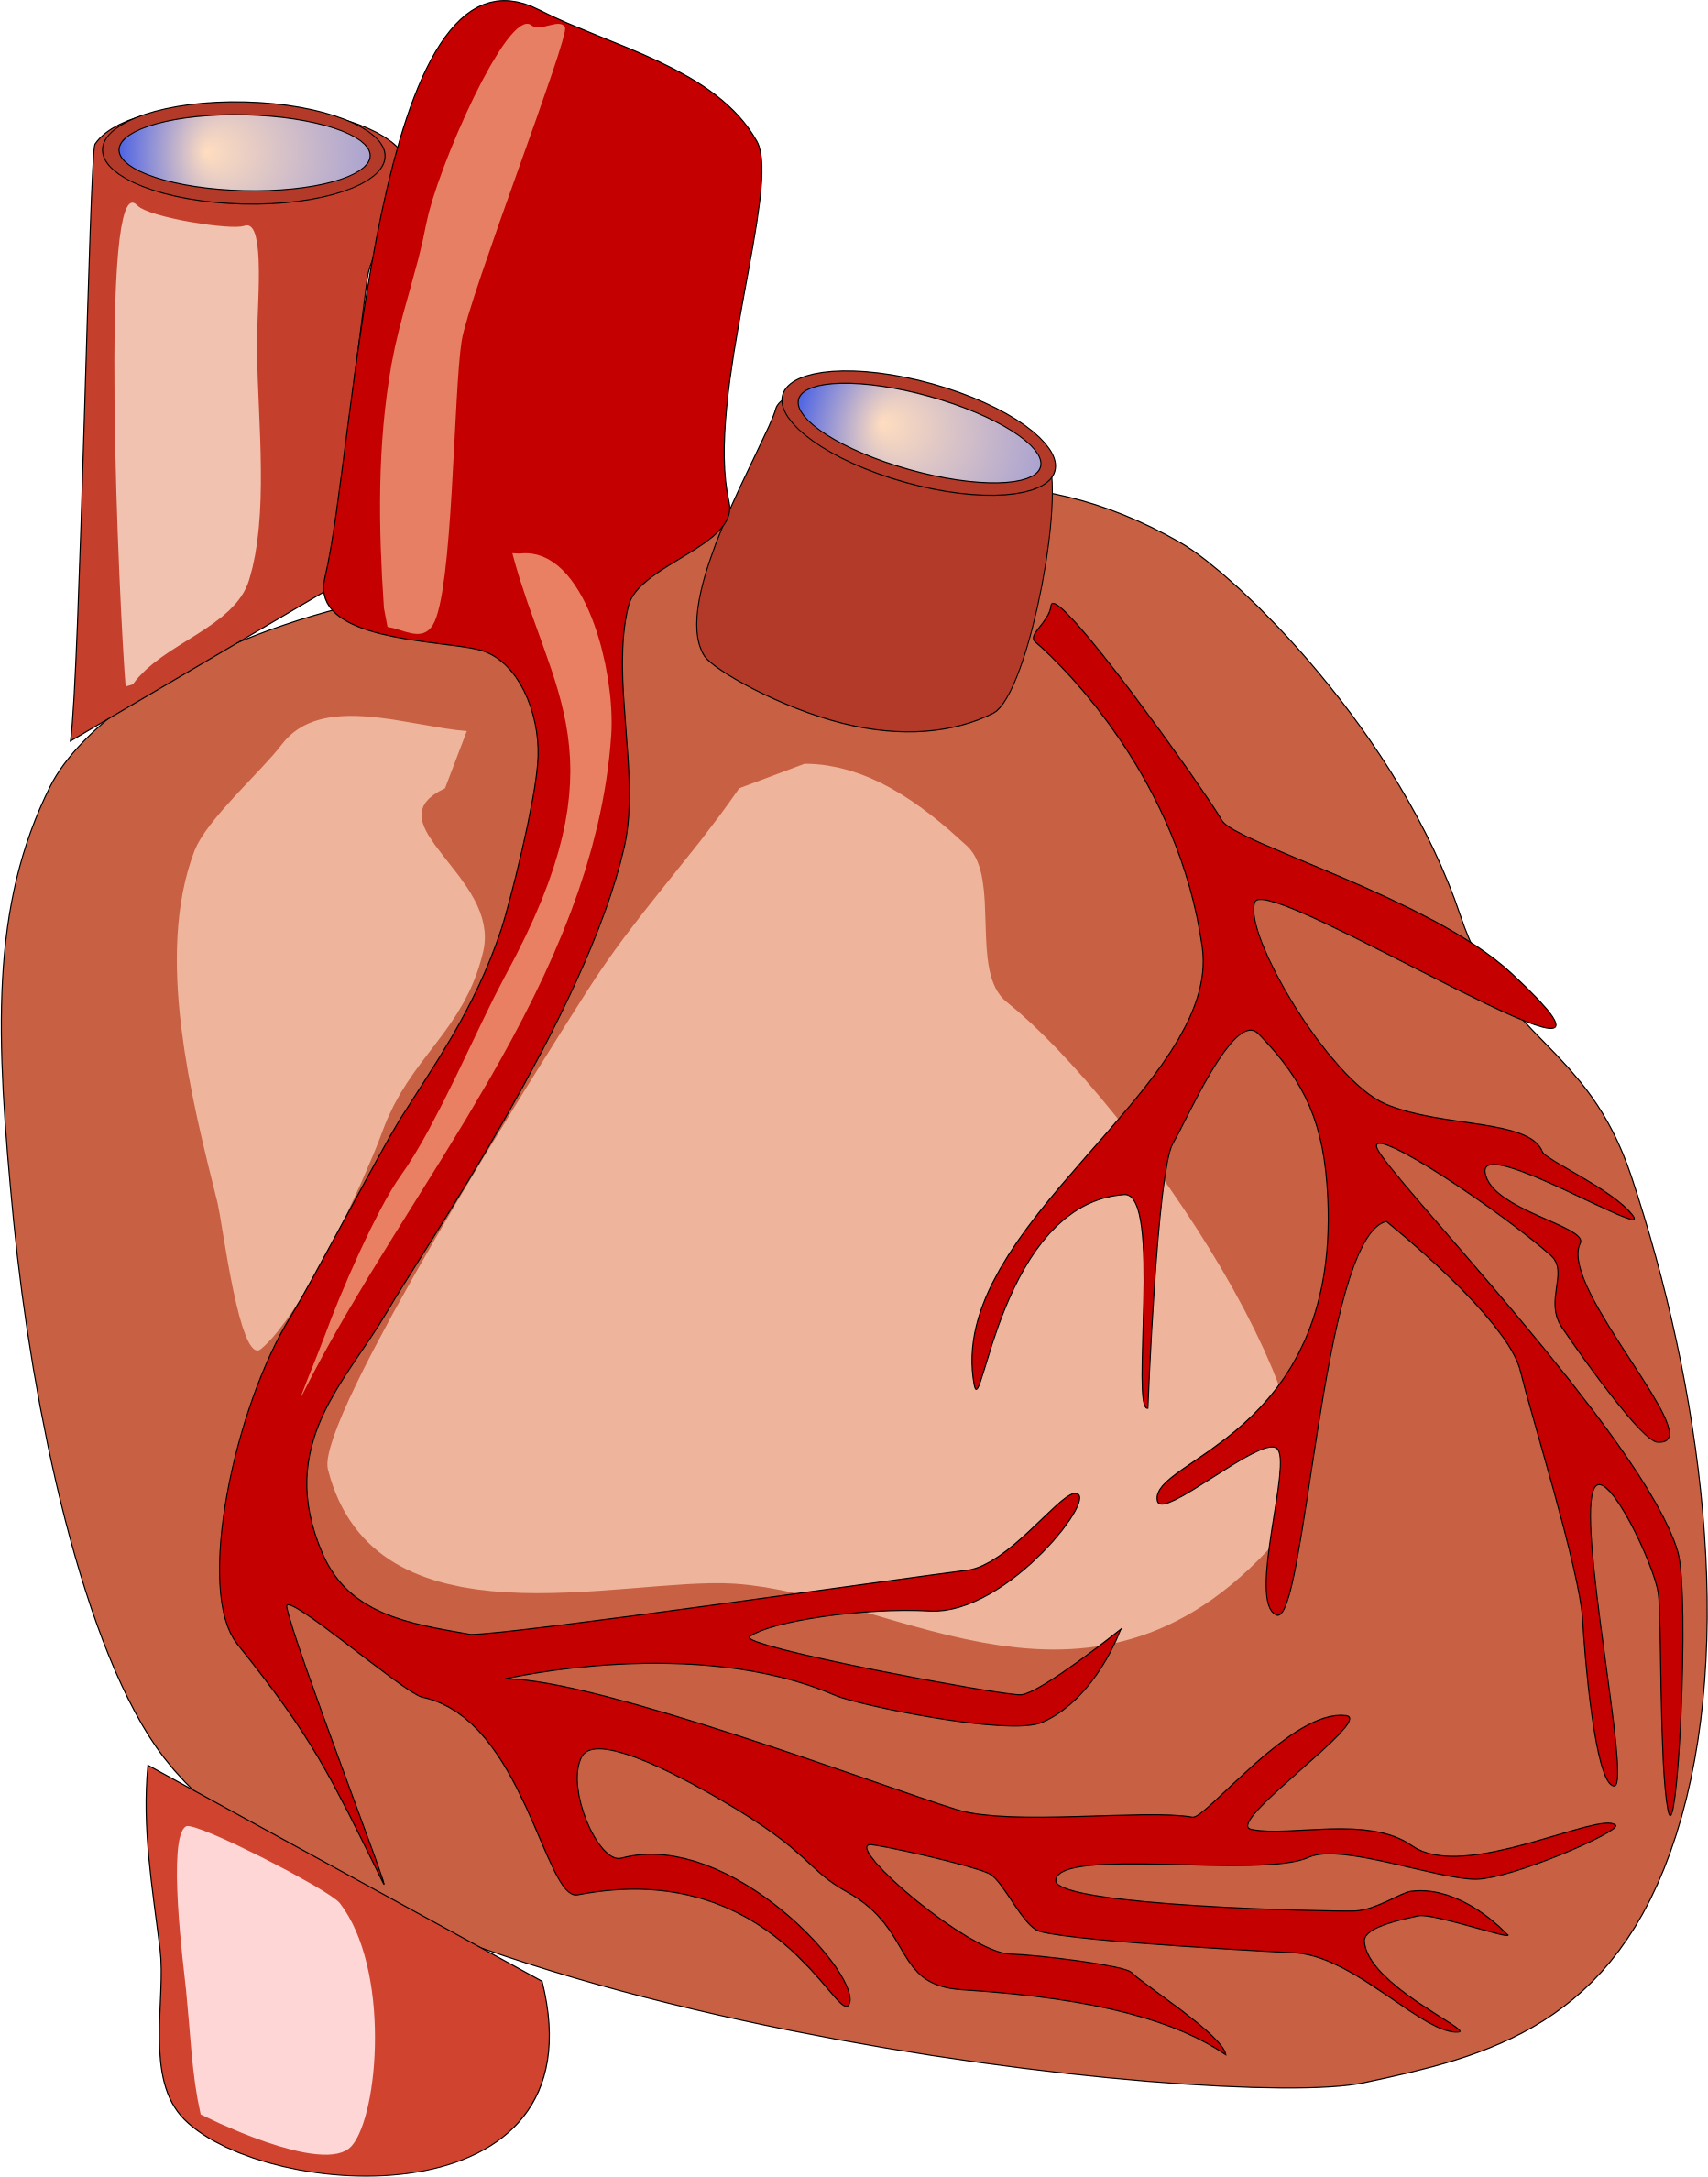 Орган сердце человека рисунок. Сердце анатомия. Человеческое сердце на прозрачном фоне.